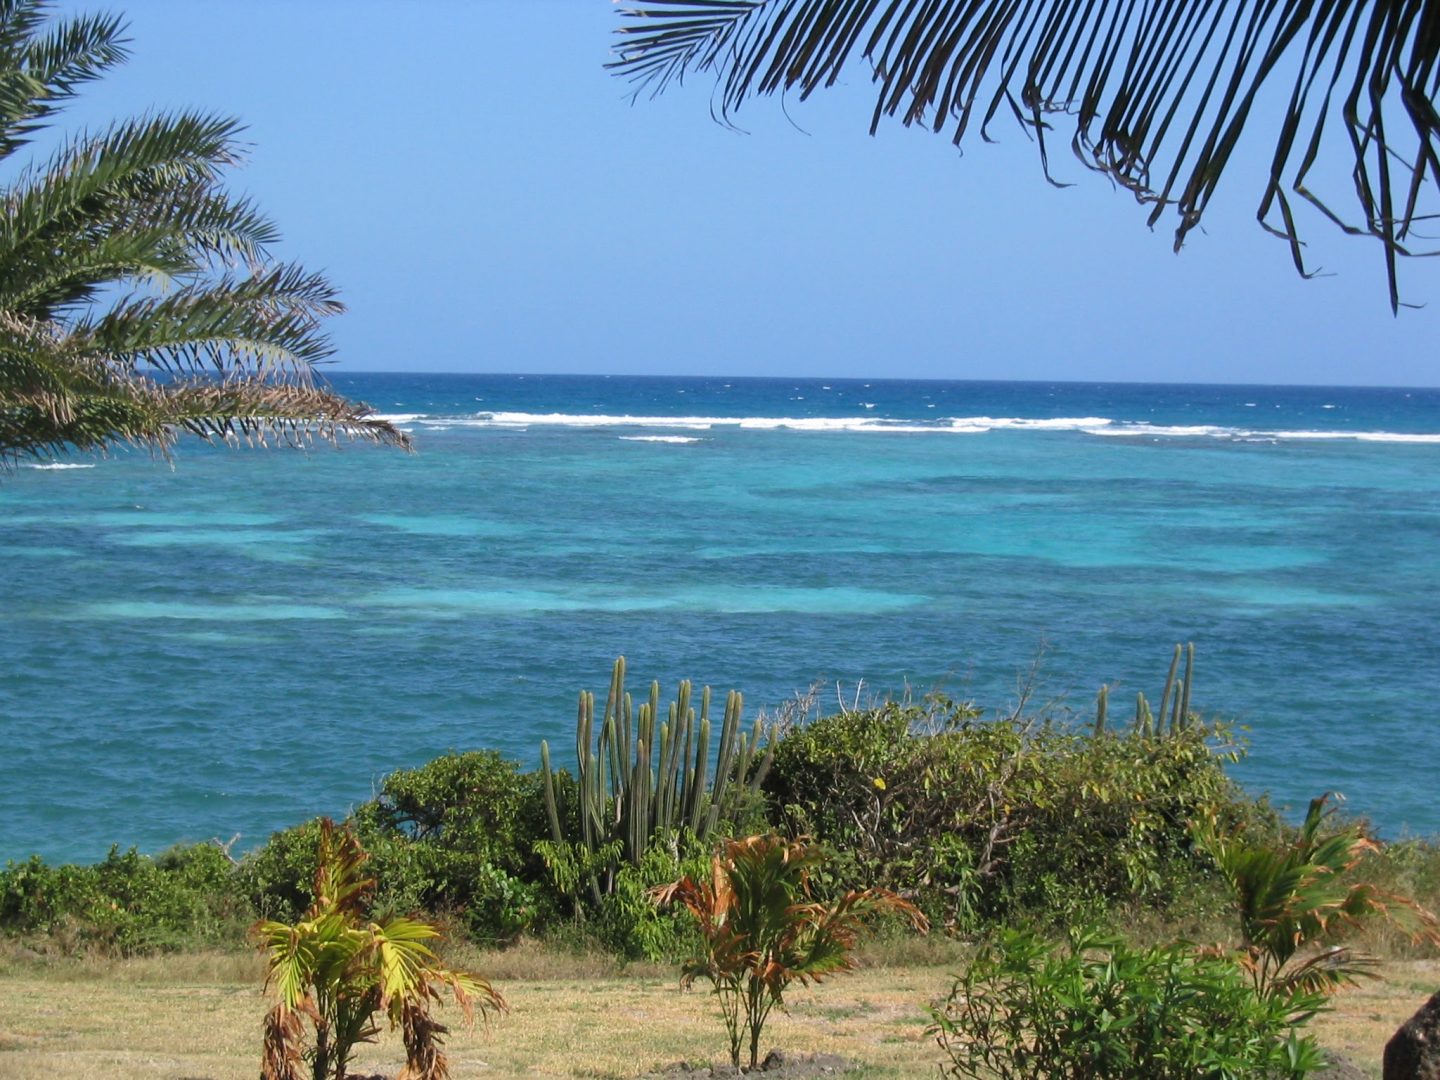 Views across Coco Beach